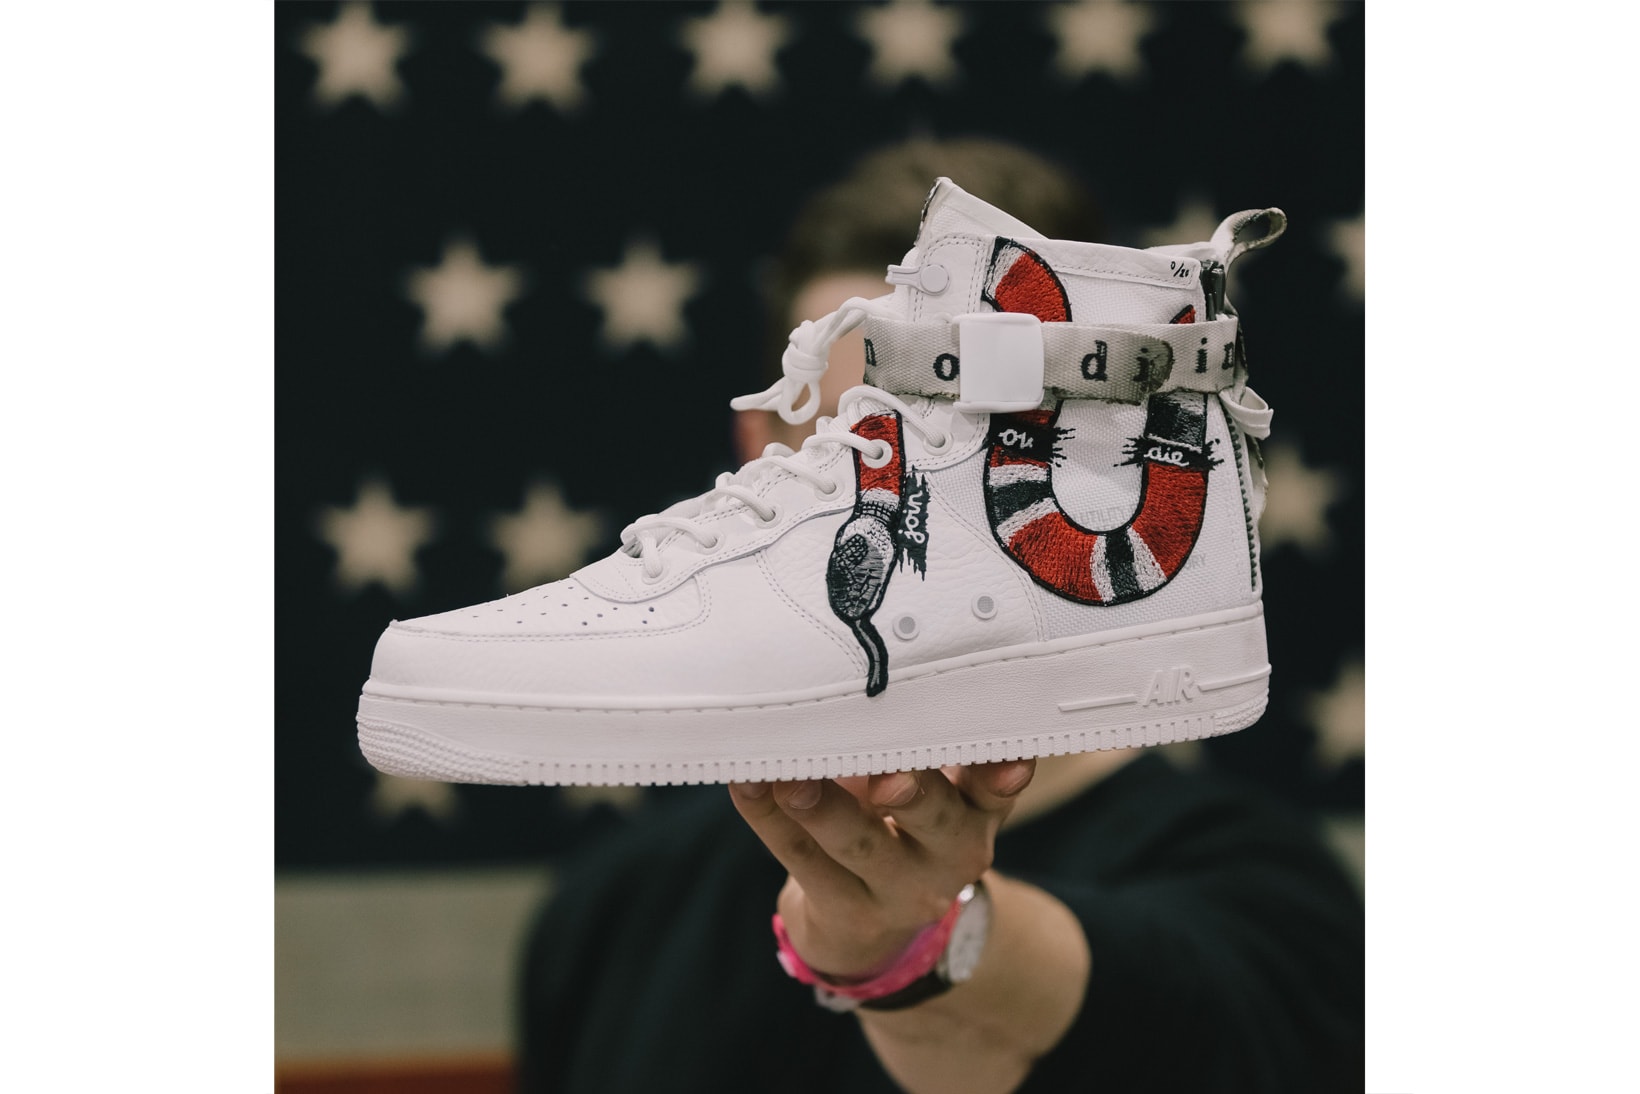 Snake Air Force 1 Custom Sneaker Shoes 